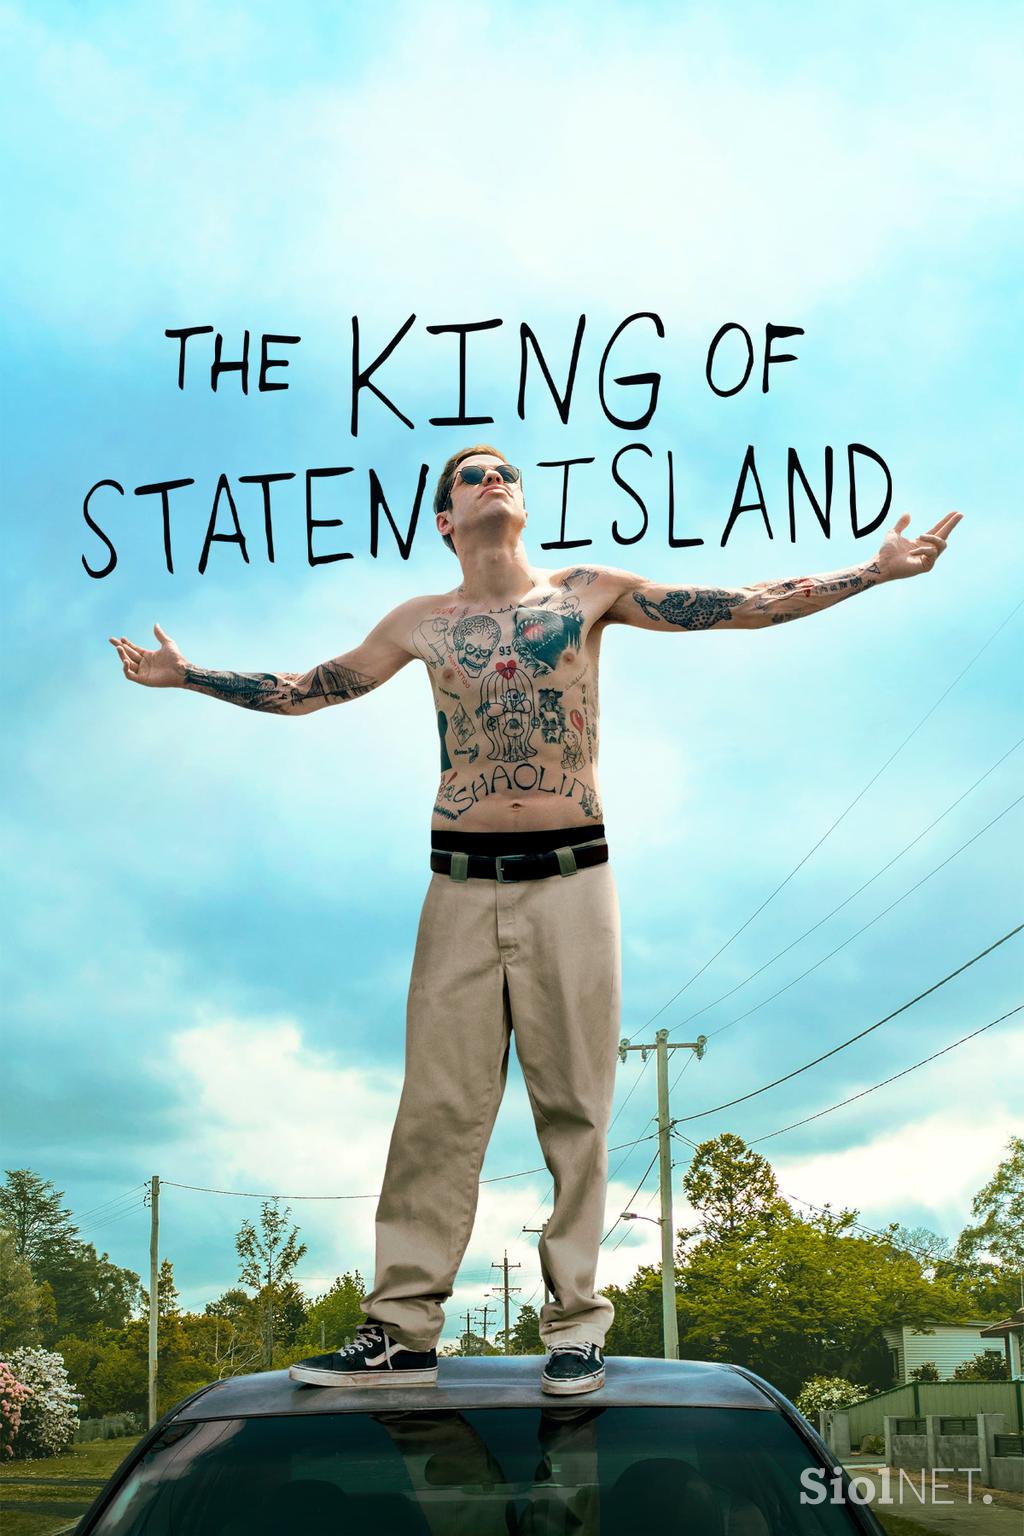 Kralj Staten Islanda